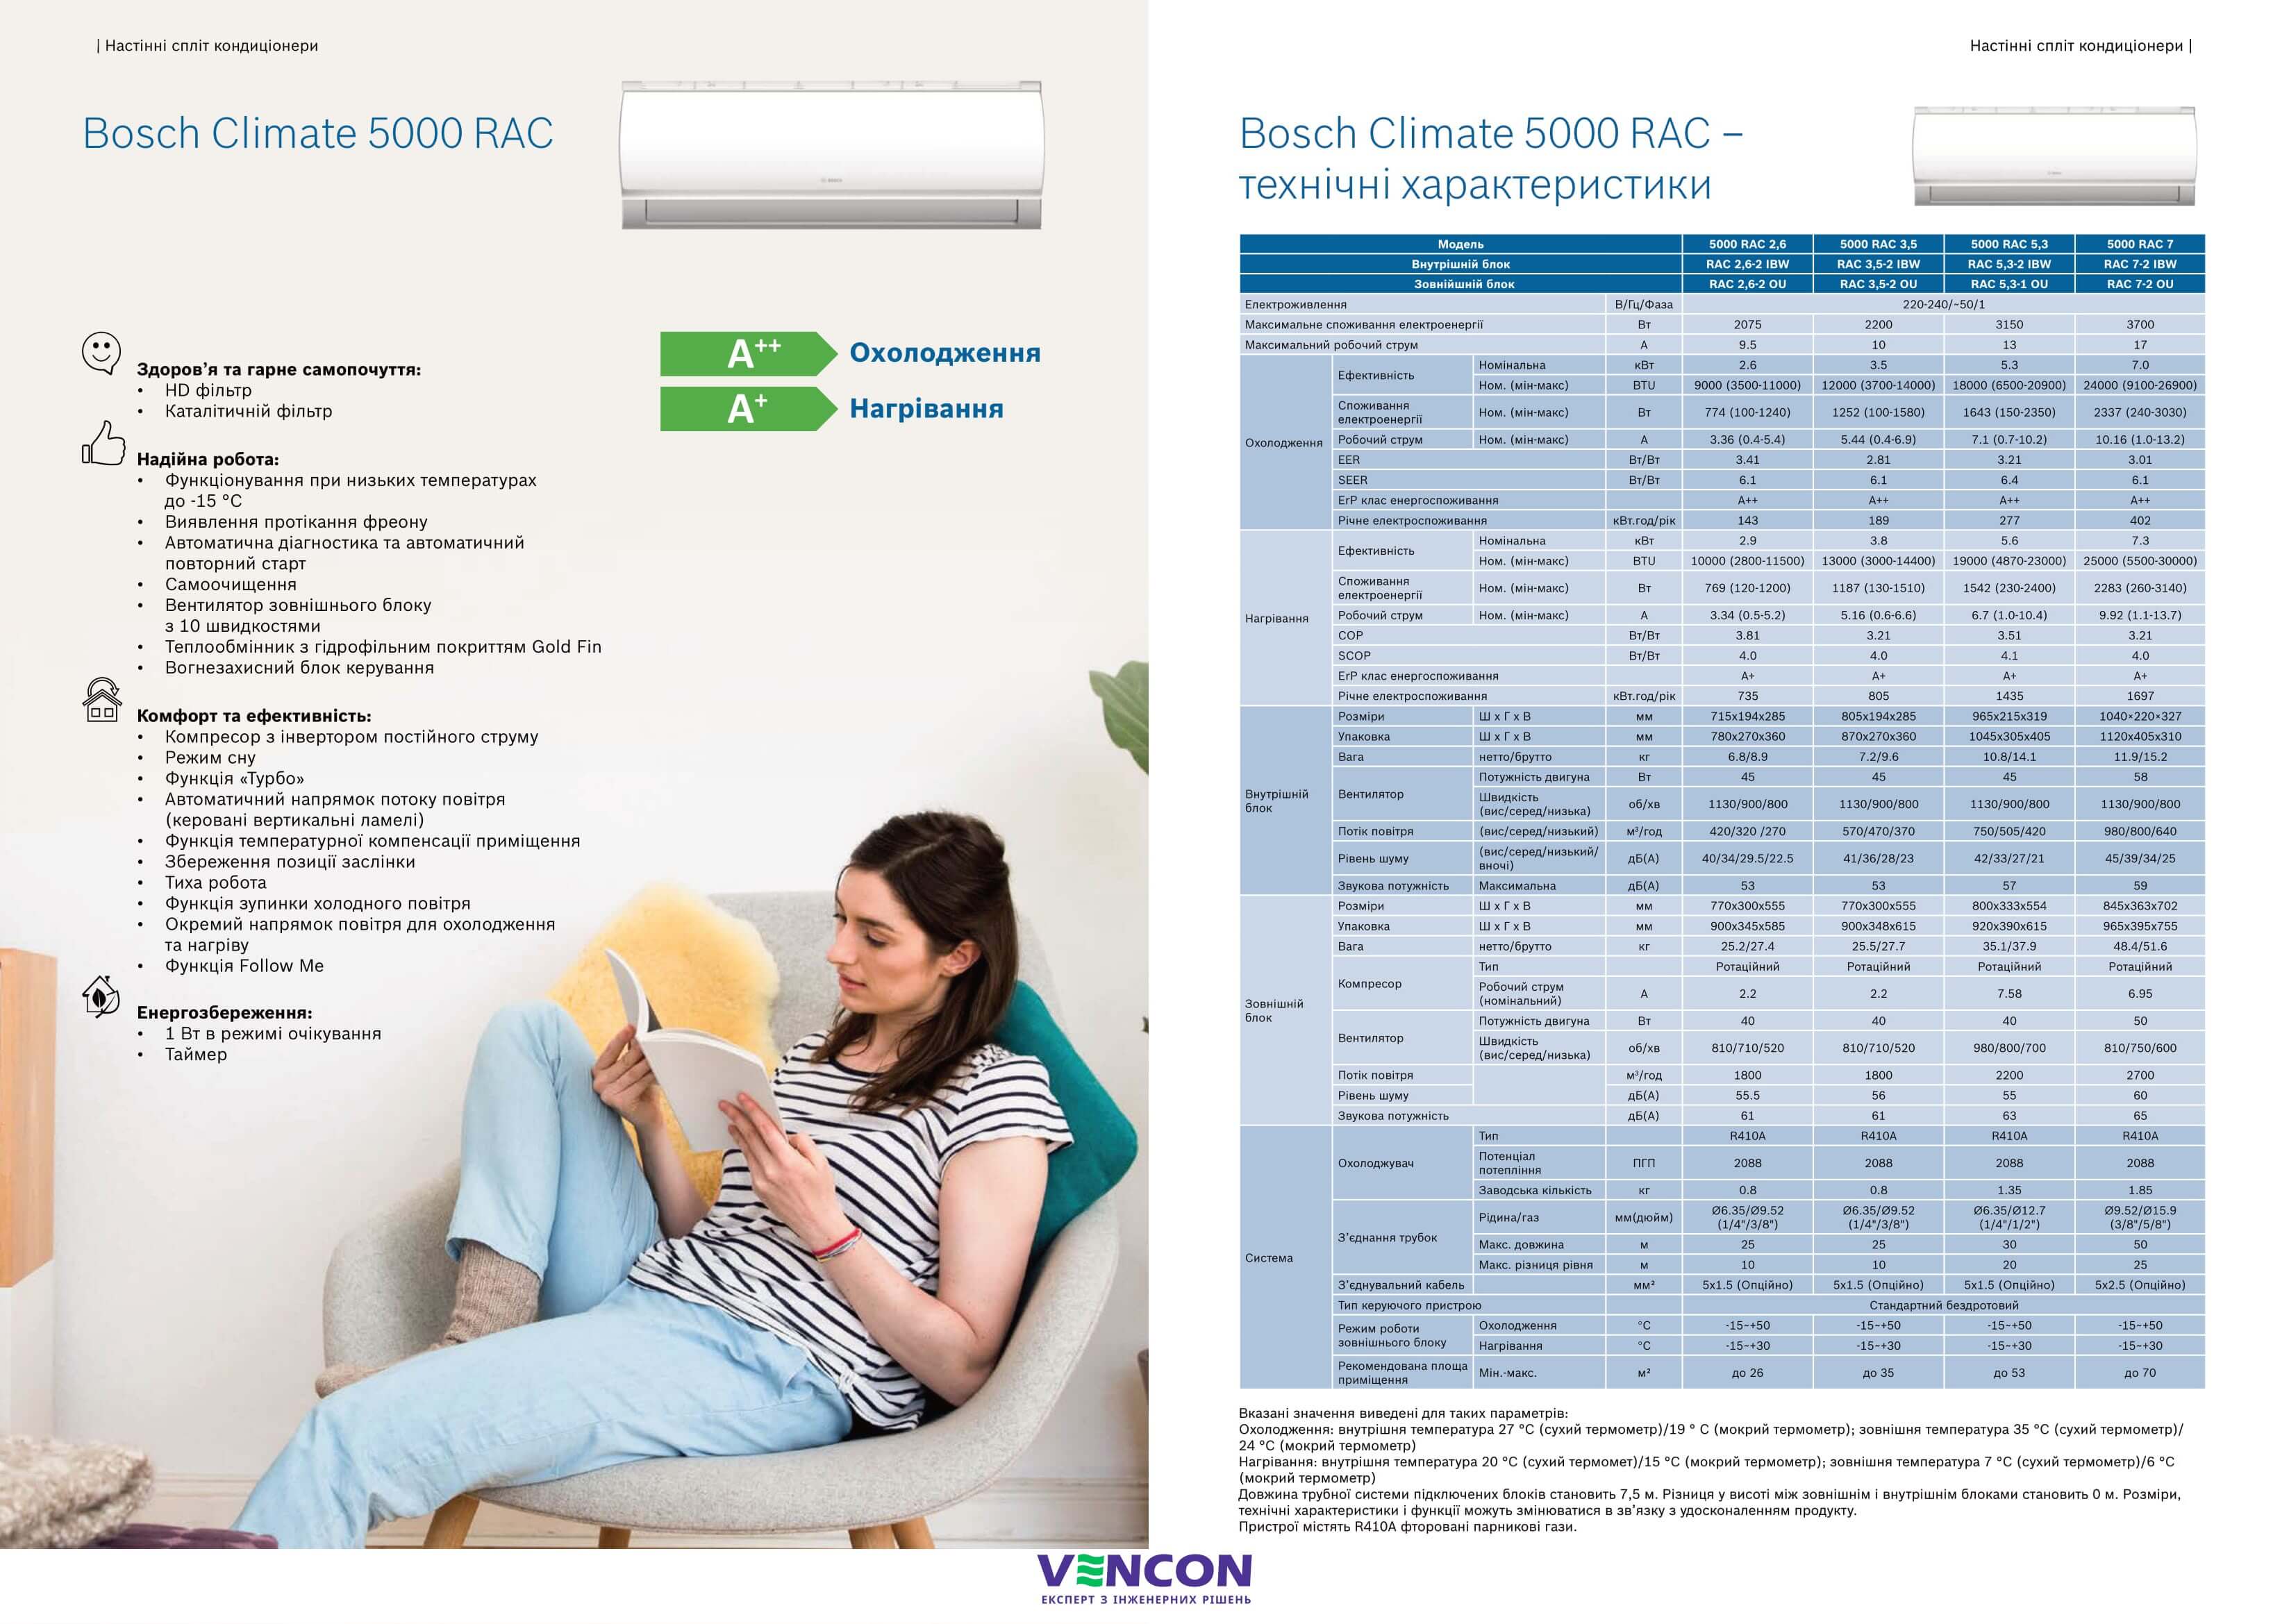 Bosch Climate 5000 RAC 5,3-2 IBW Характеристики